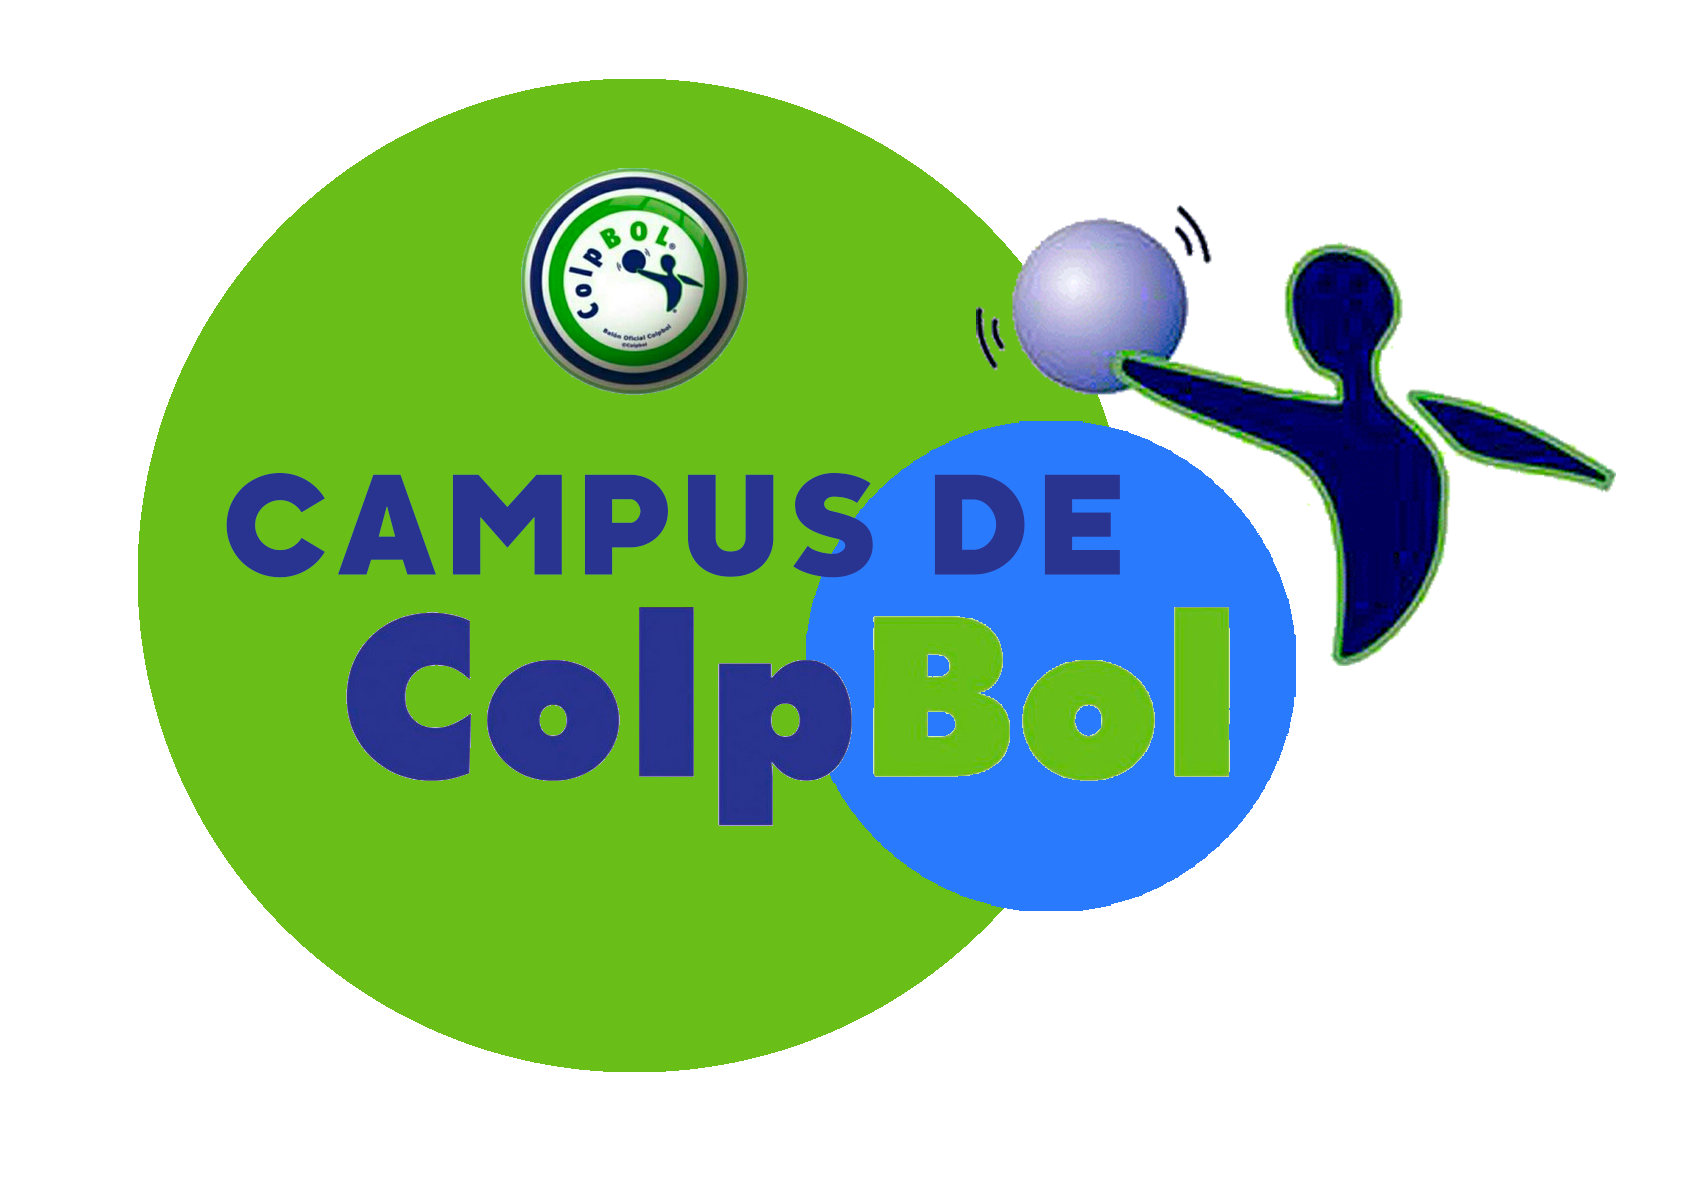 Campus de Colpbol 2021